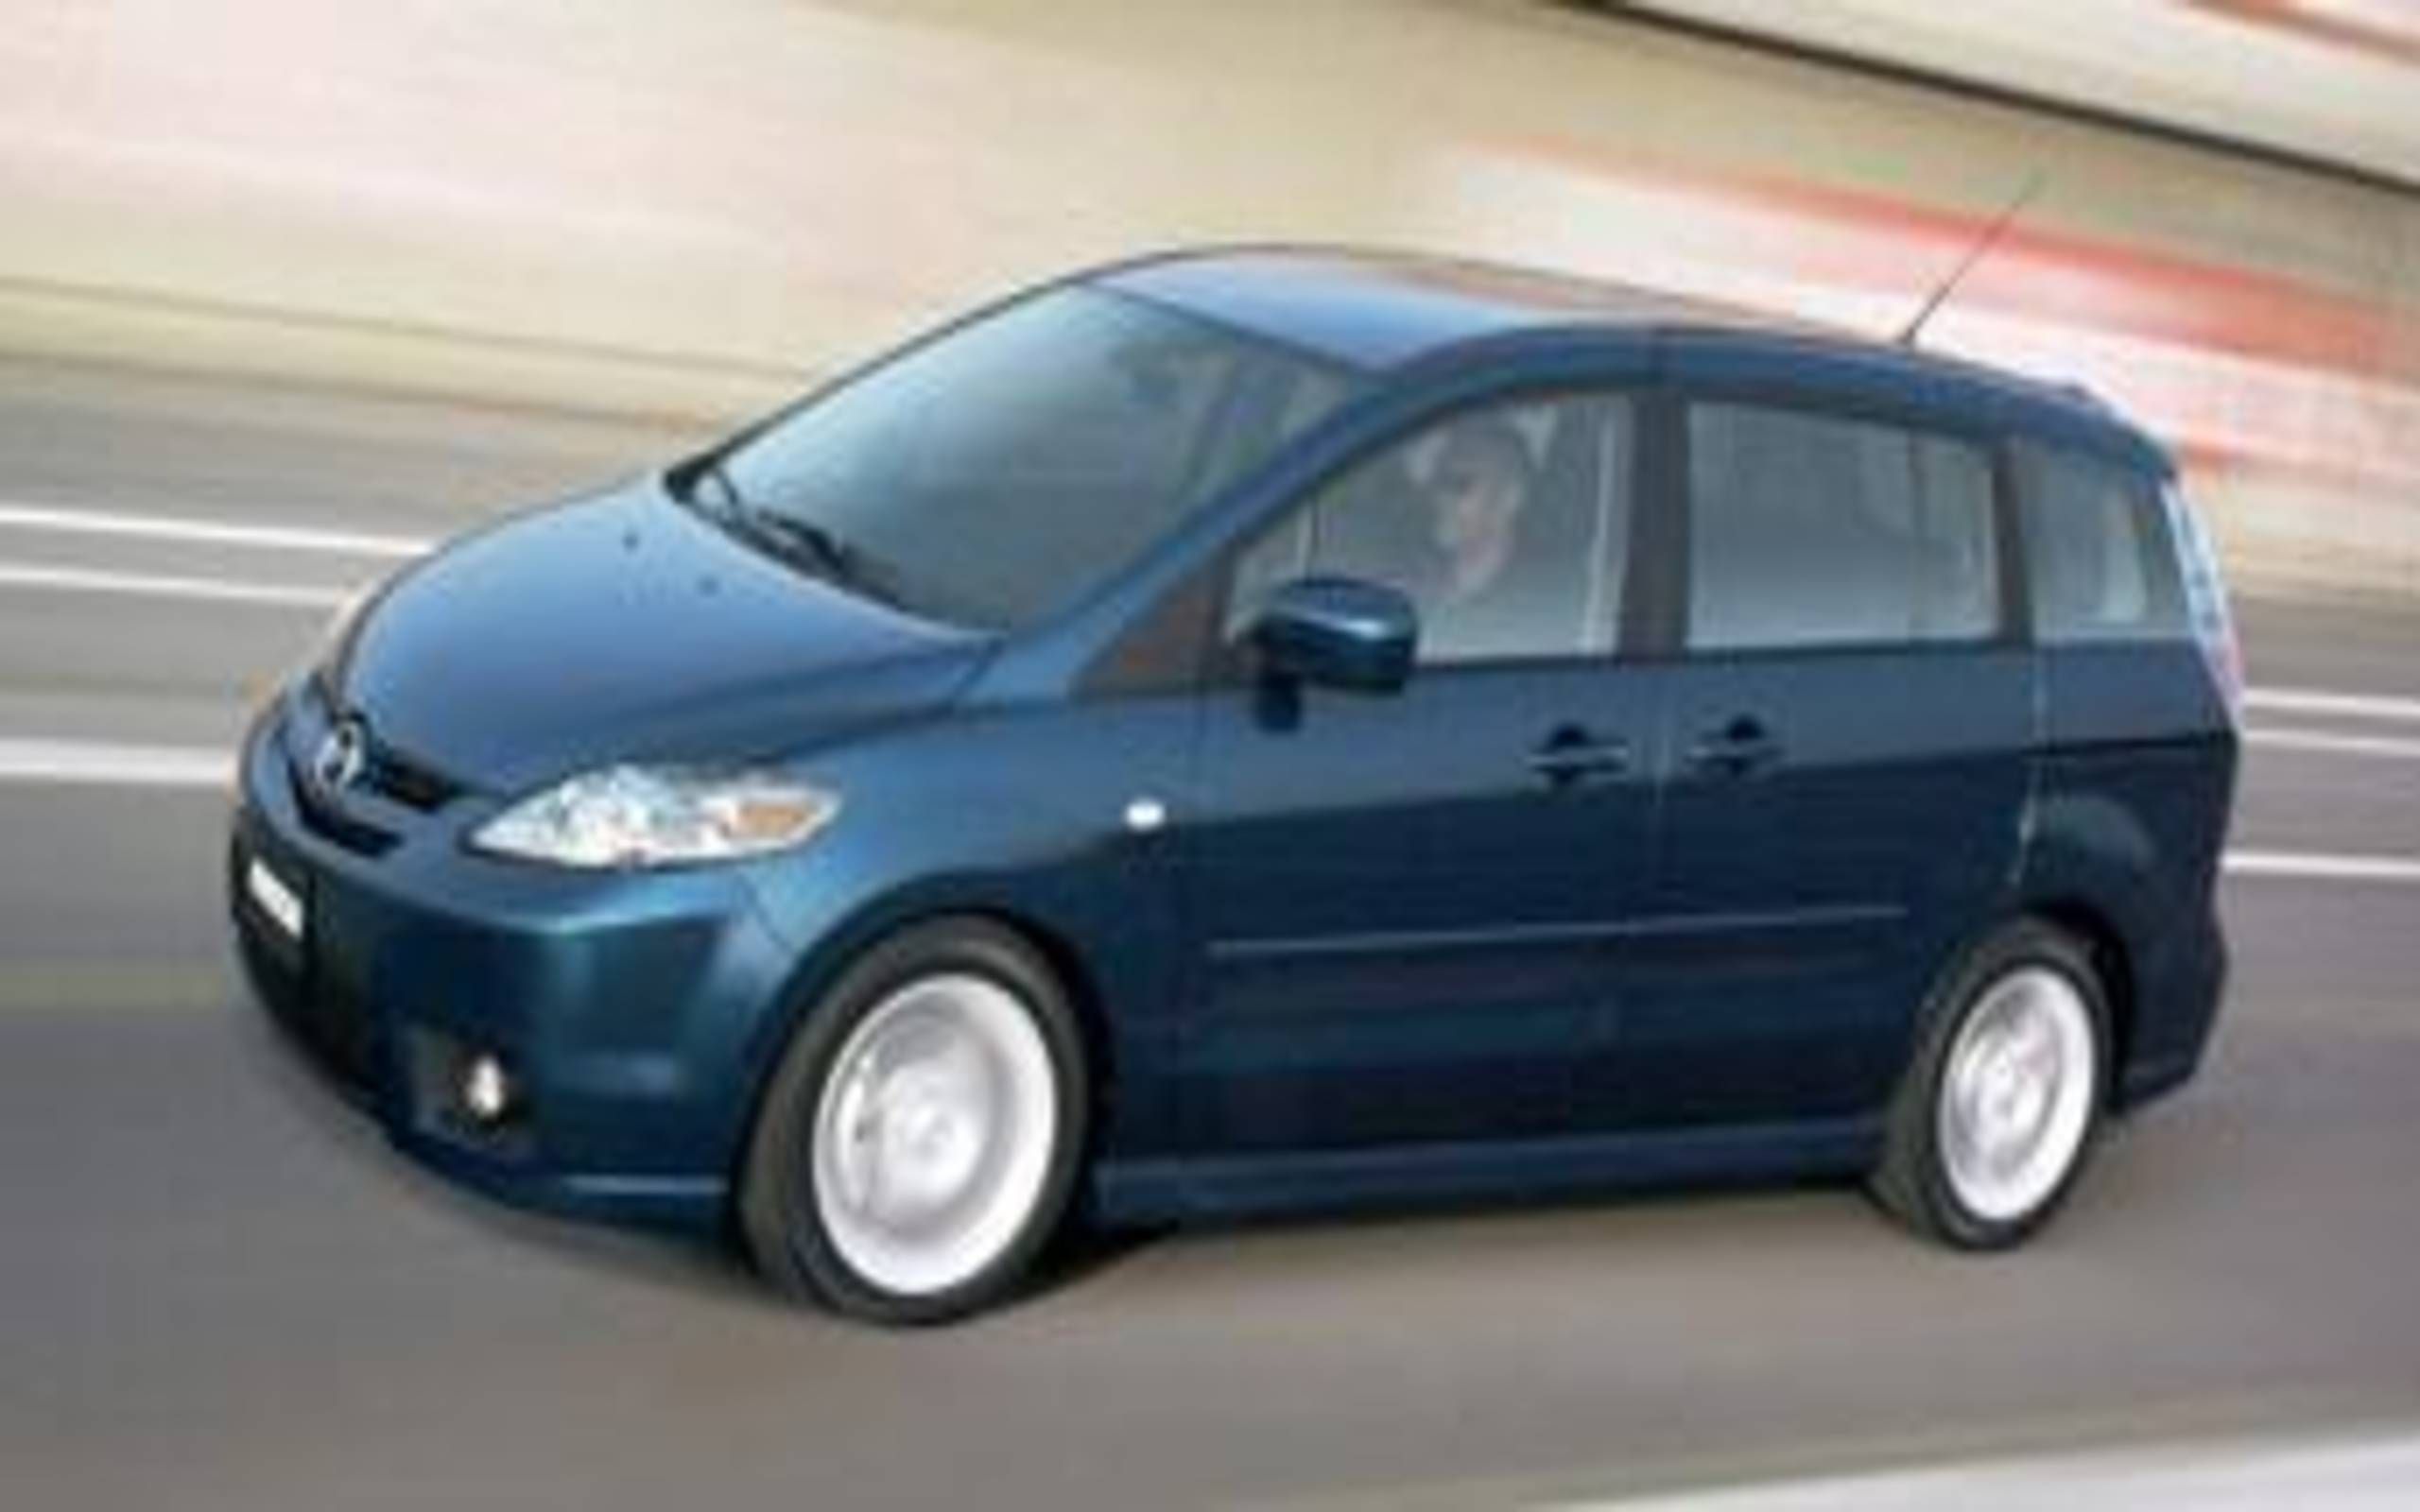 2006 Mazda 5: Mini in Minivan: Will buy something as small as the Mazda 5?